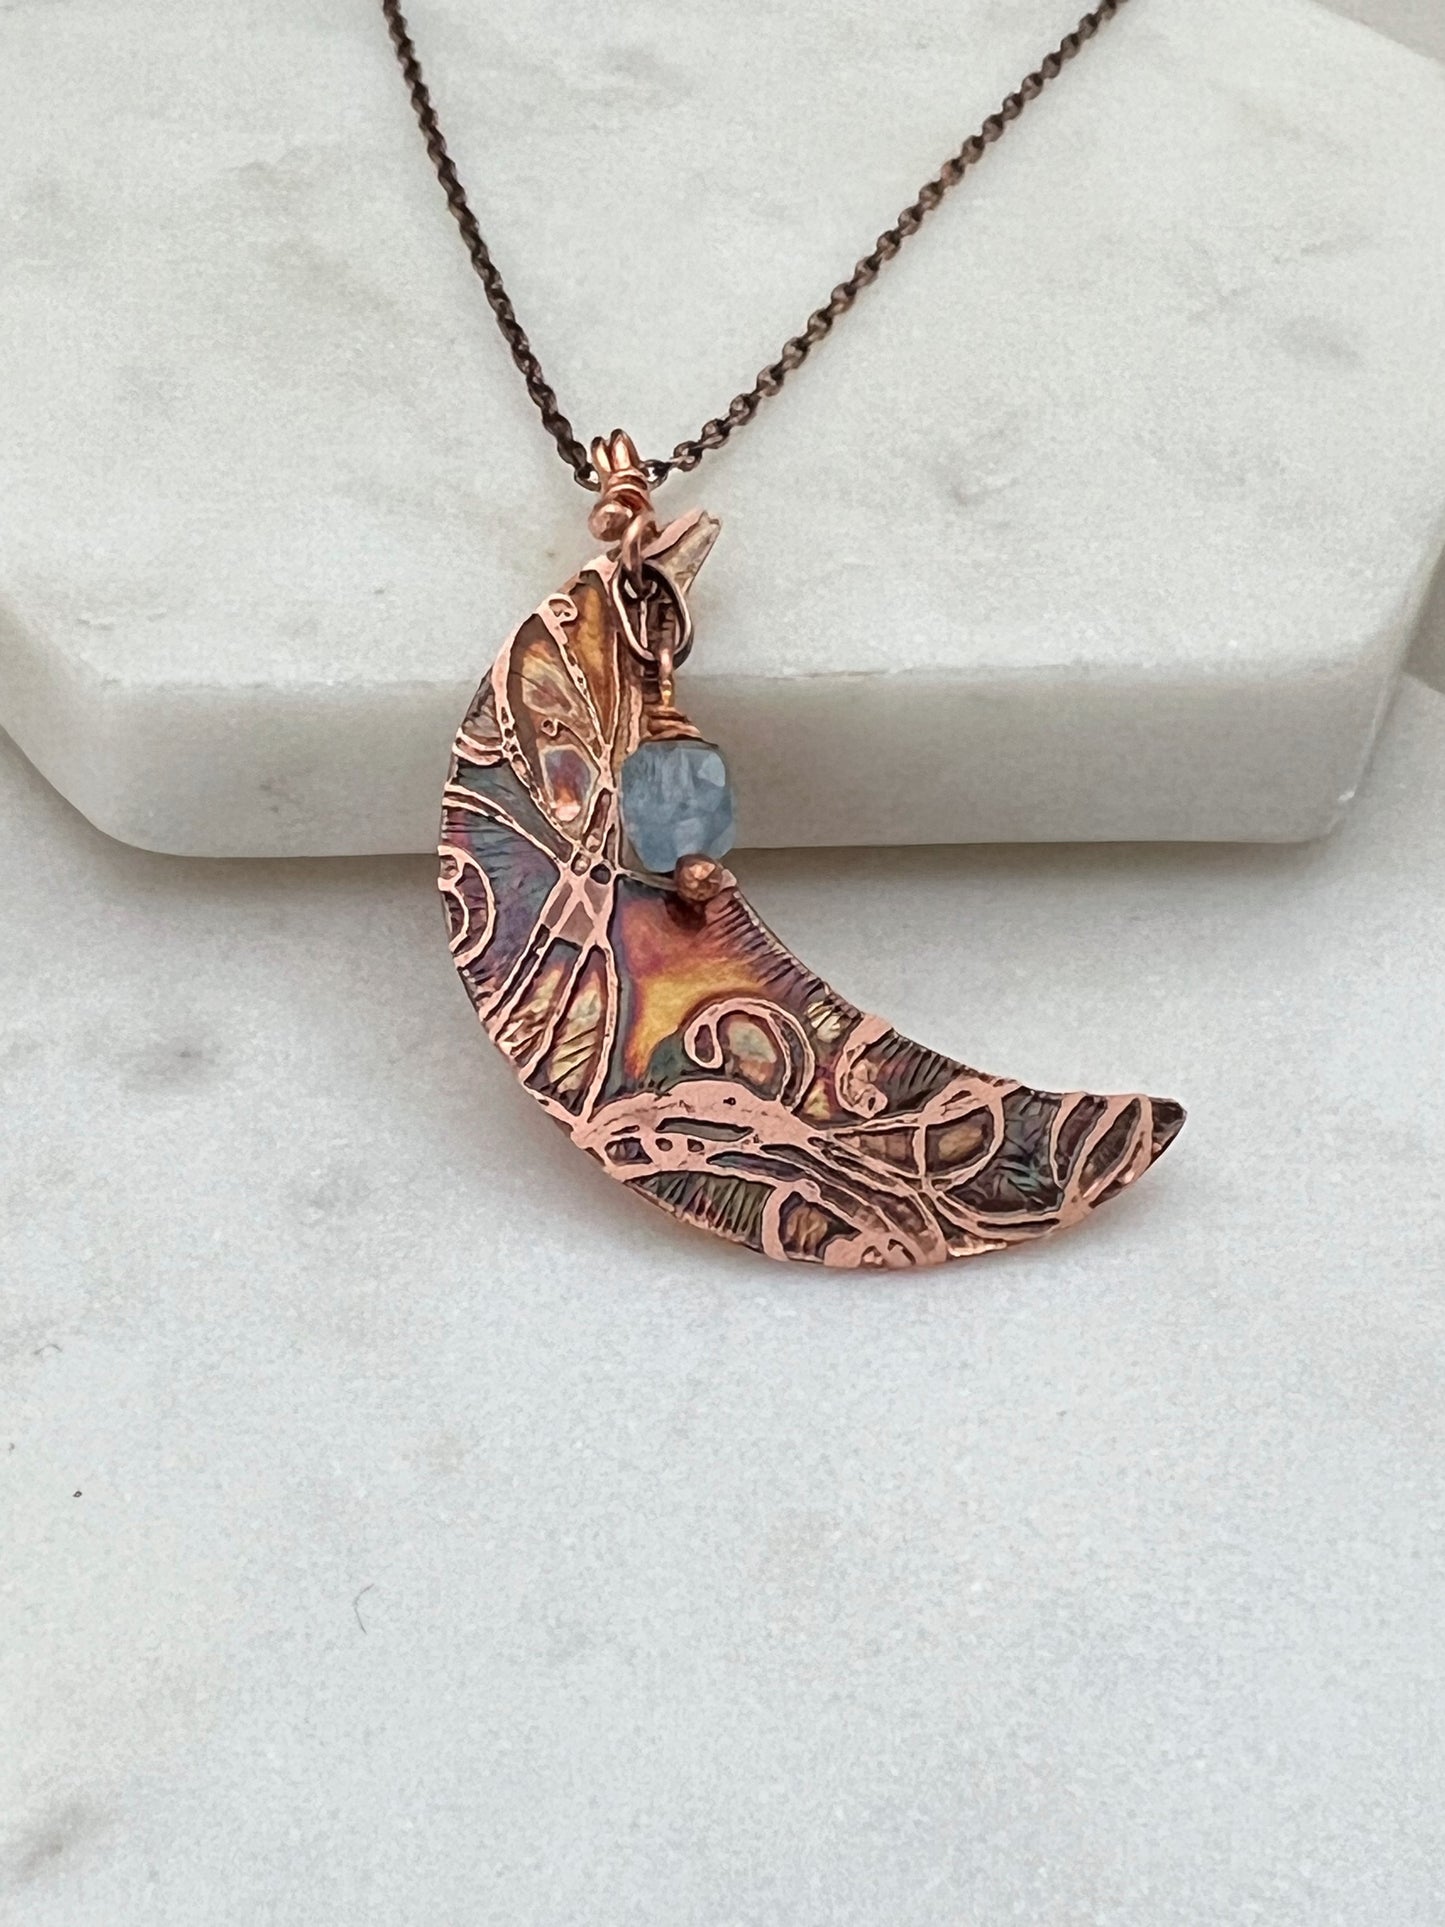 Acid etched copper crescent necklace with aquamarine gemstone